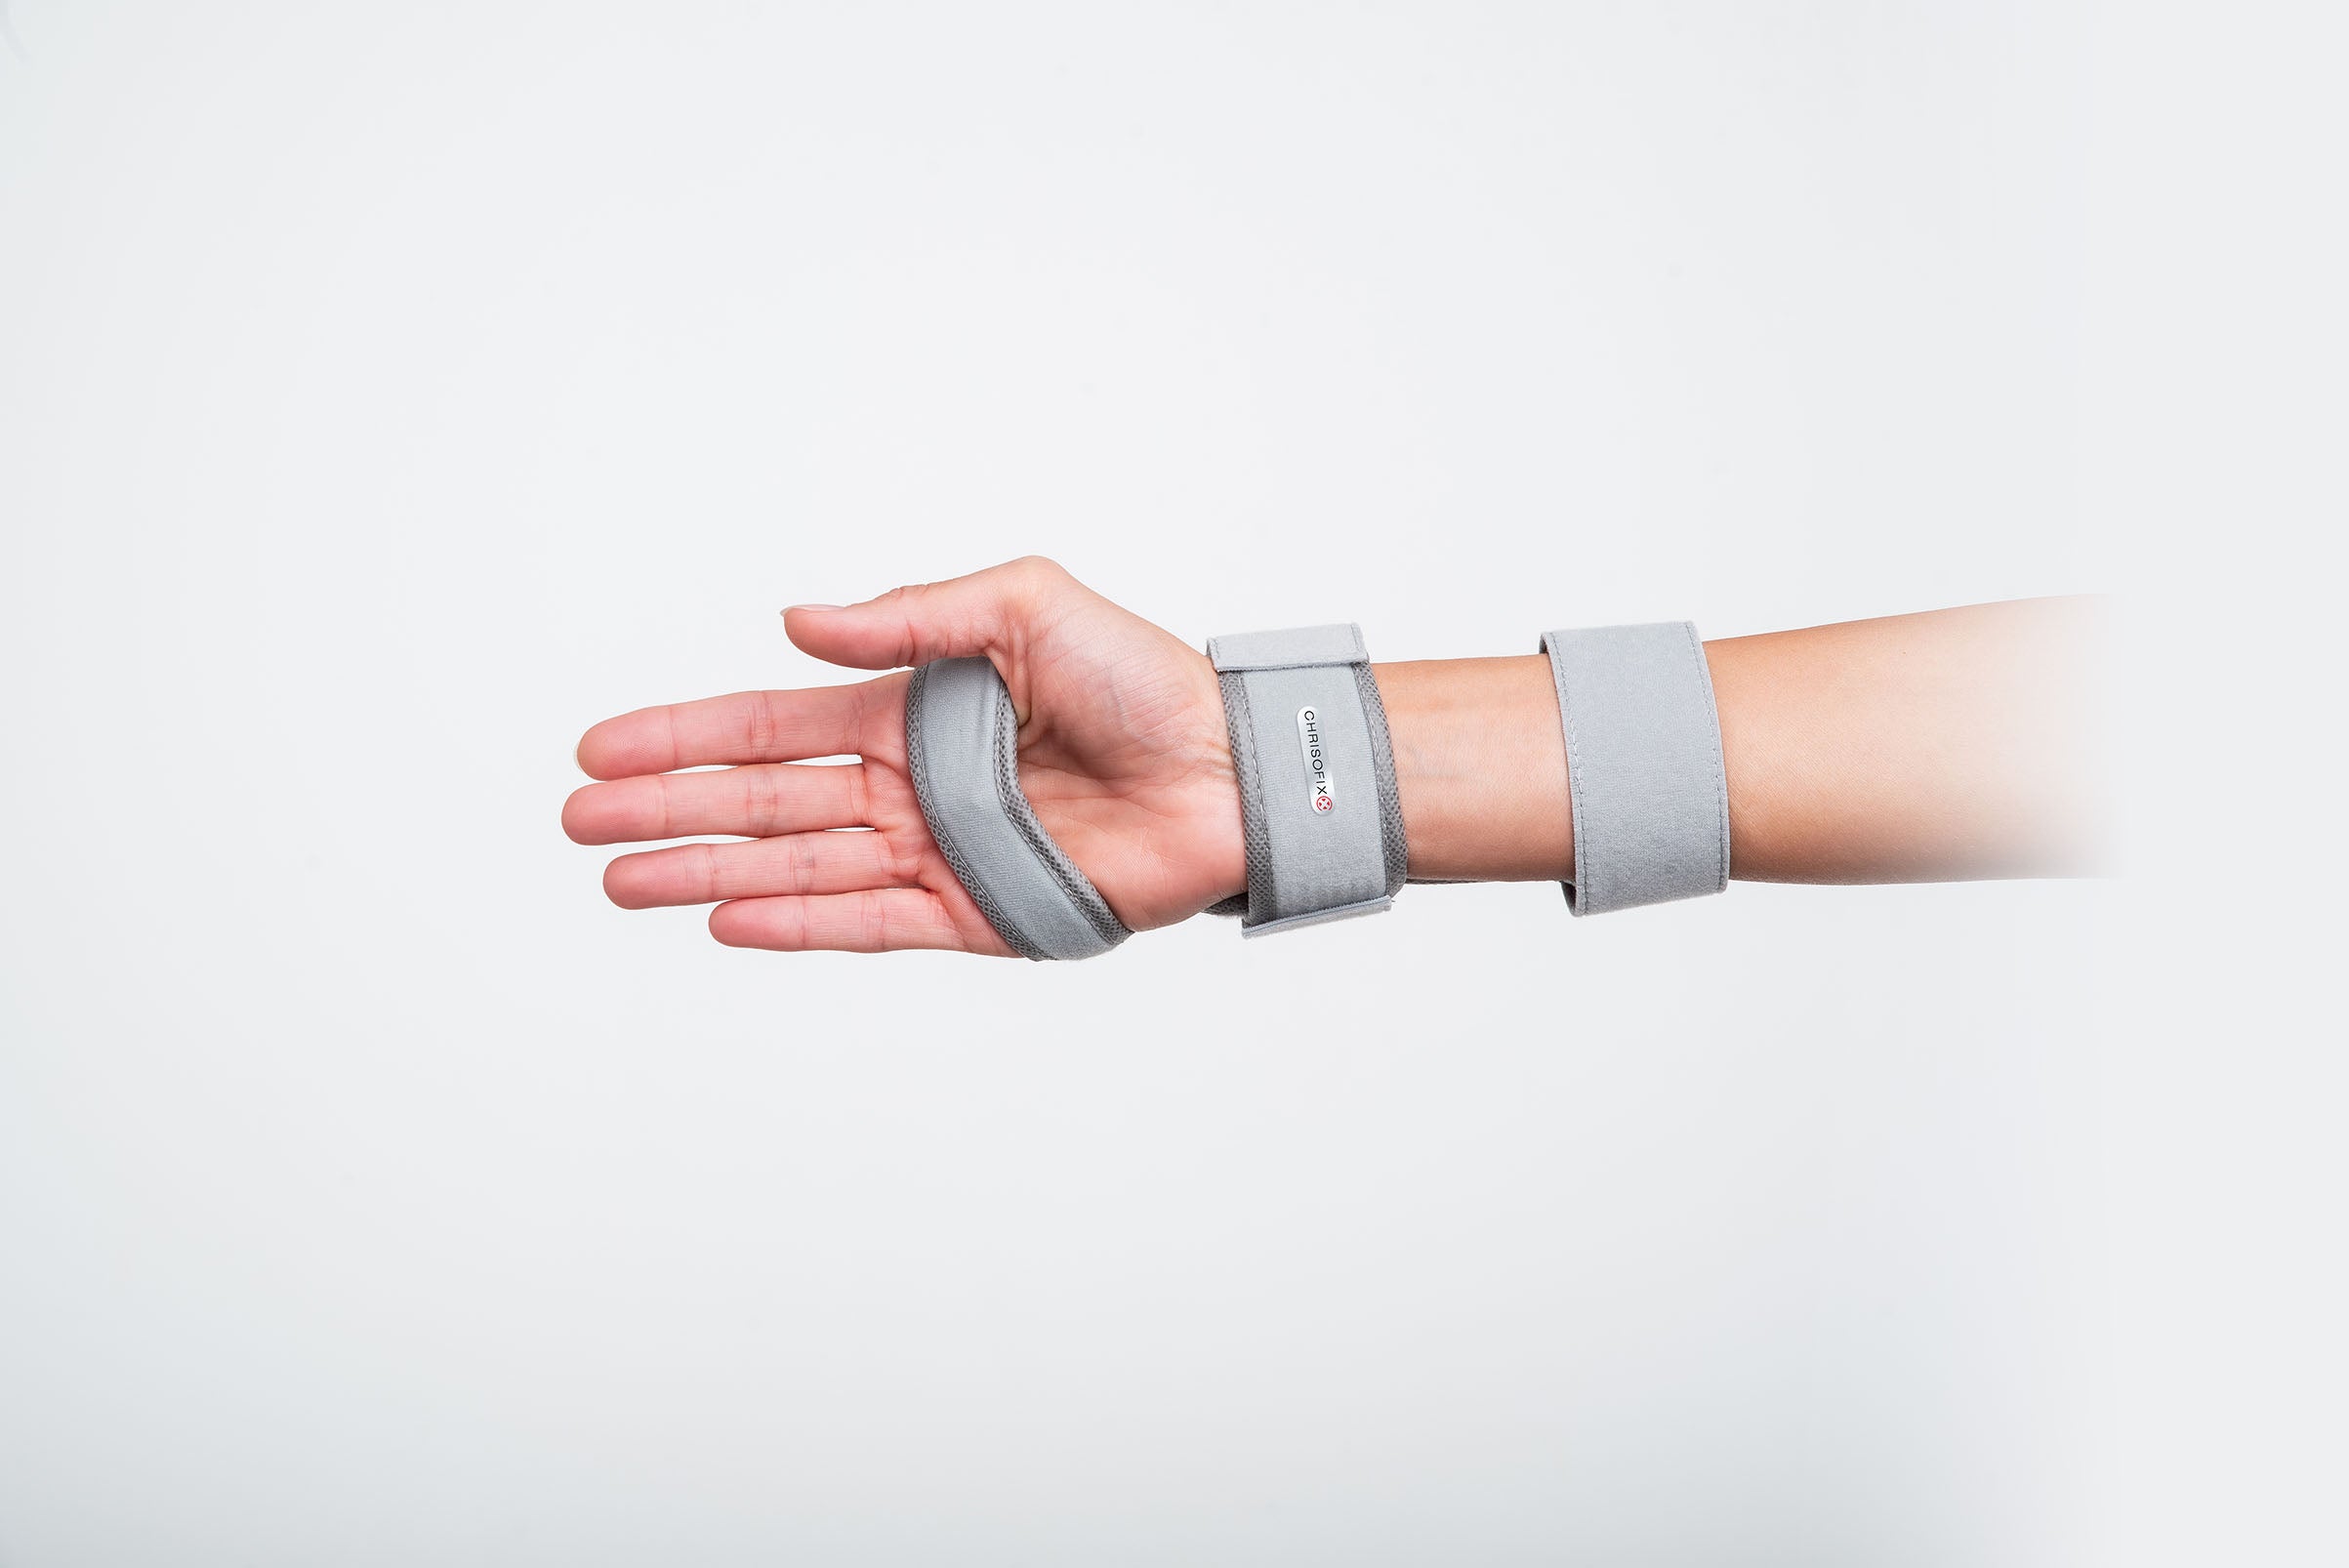 Universal working splint for wrist